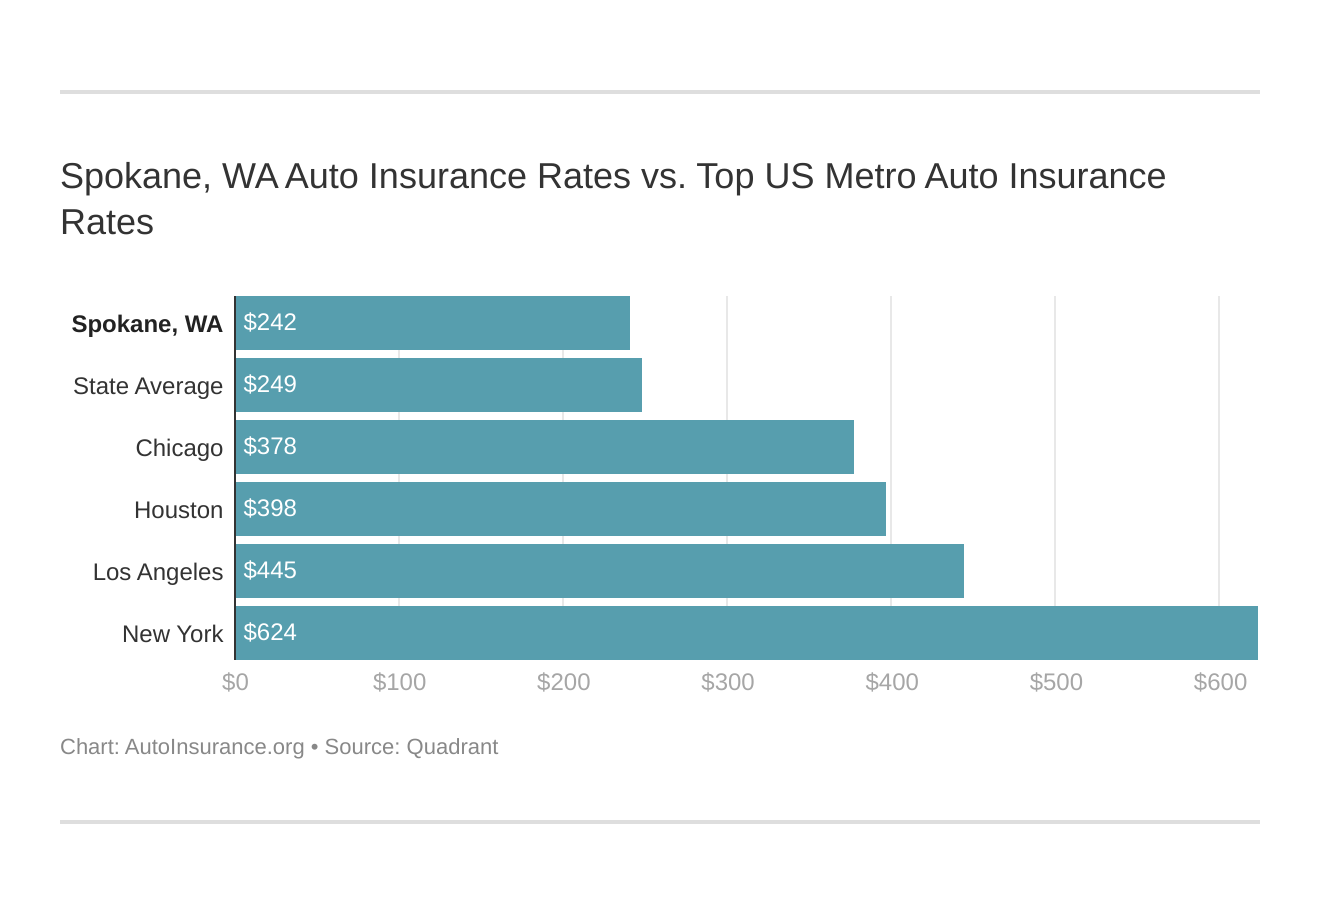 Spokane, WA Auto Insurance Rates vs. Top US Metro Auto Insurance Rates